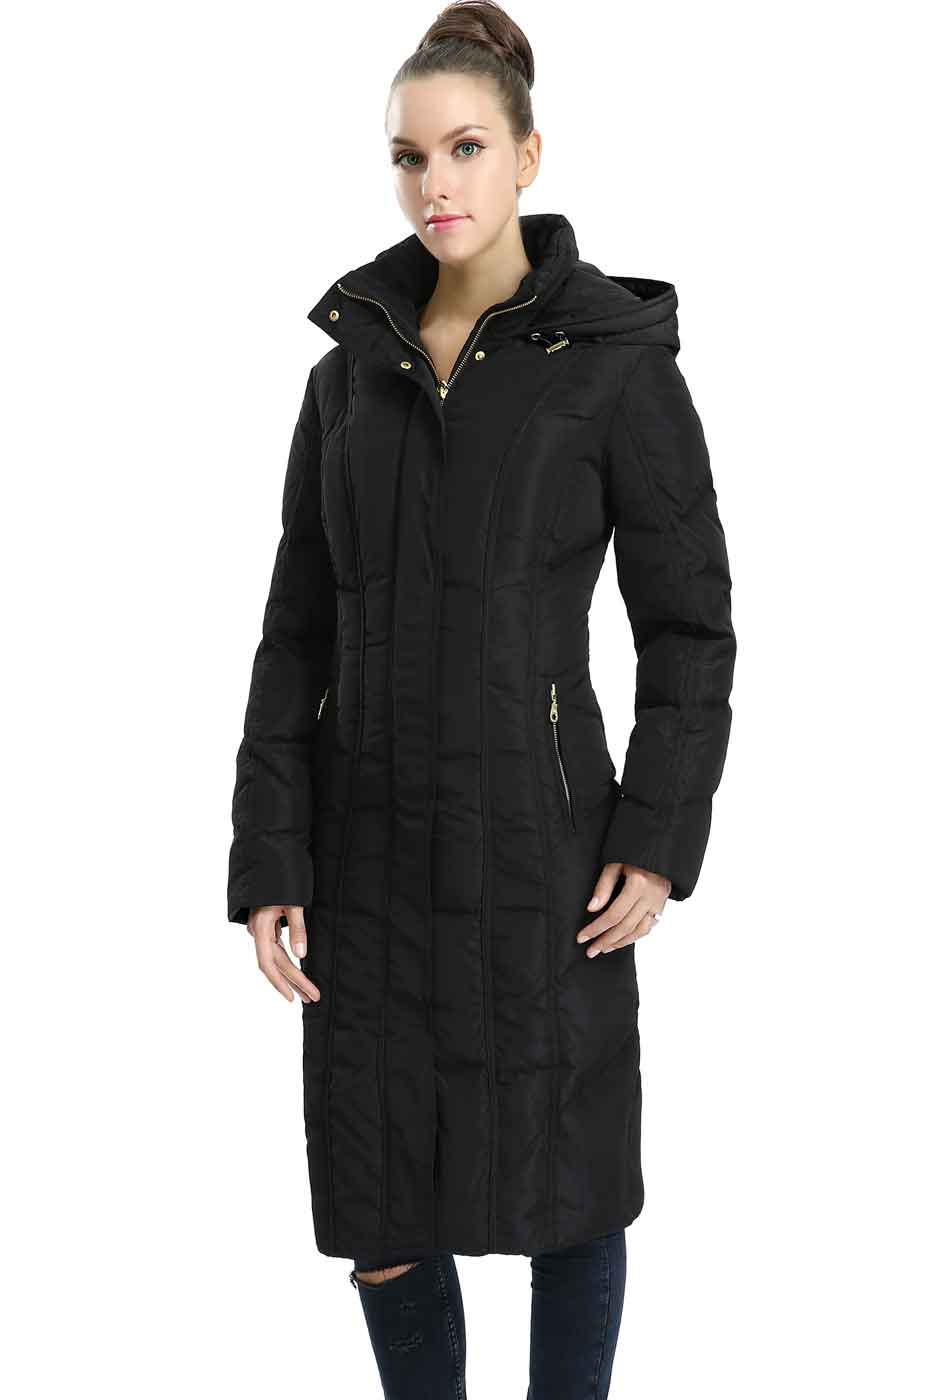 BGSD Women's Cherie Waterproof Puffer Parka Coat Regular and Plus Size 